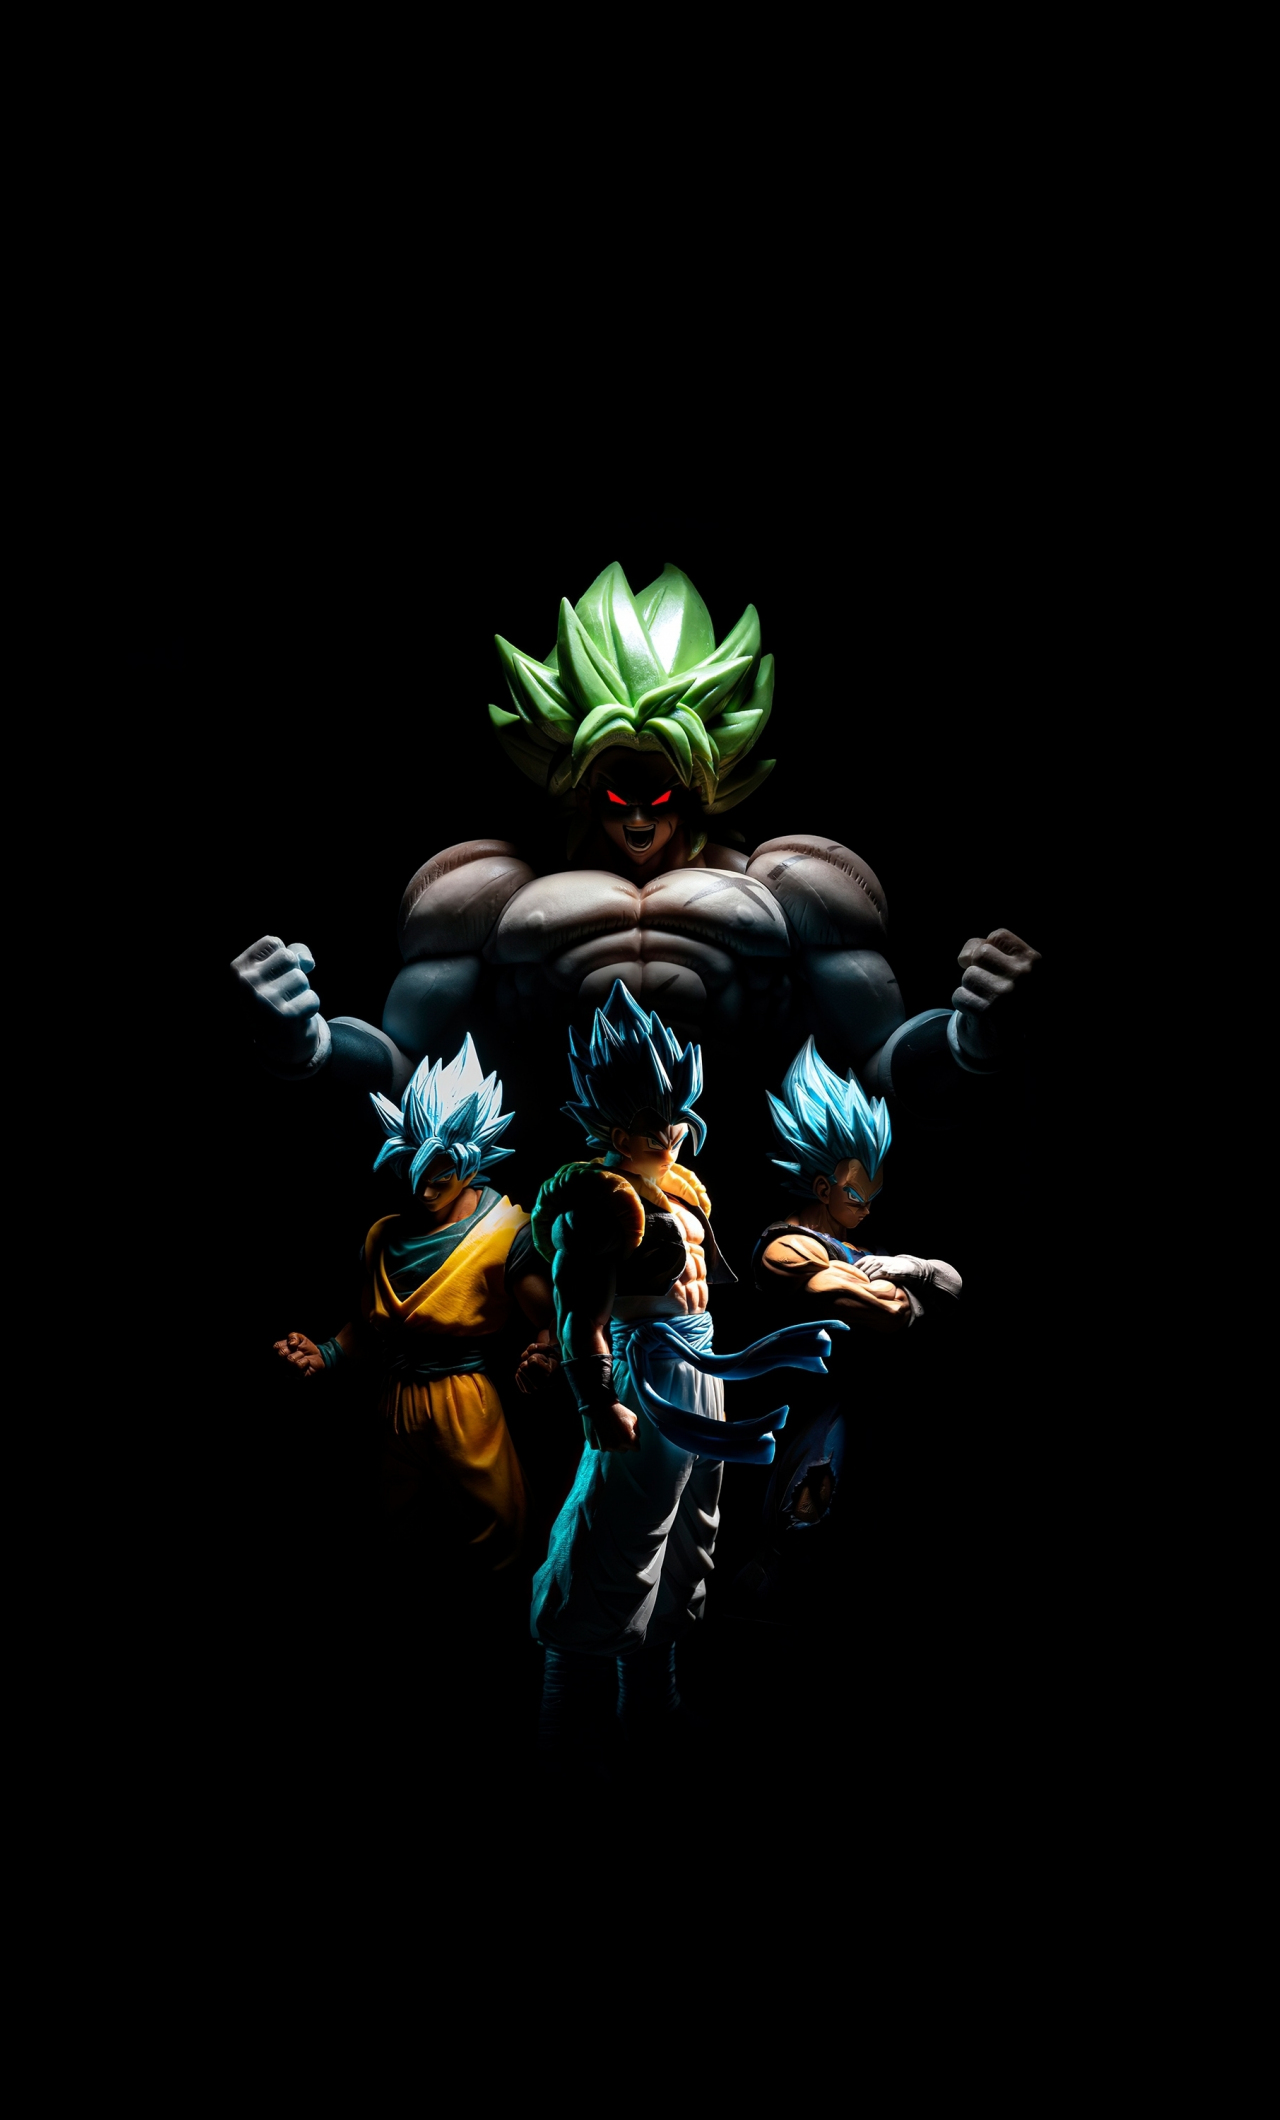 Goku and Vegeta wallpaper by LegendsDB  Download on ZEDGE  ffa1